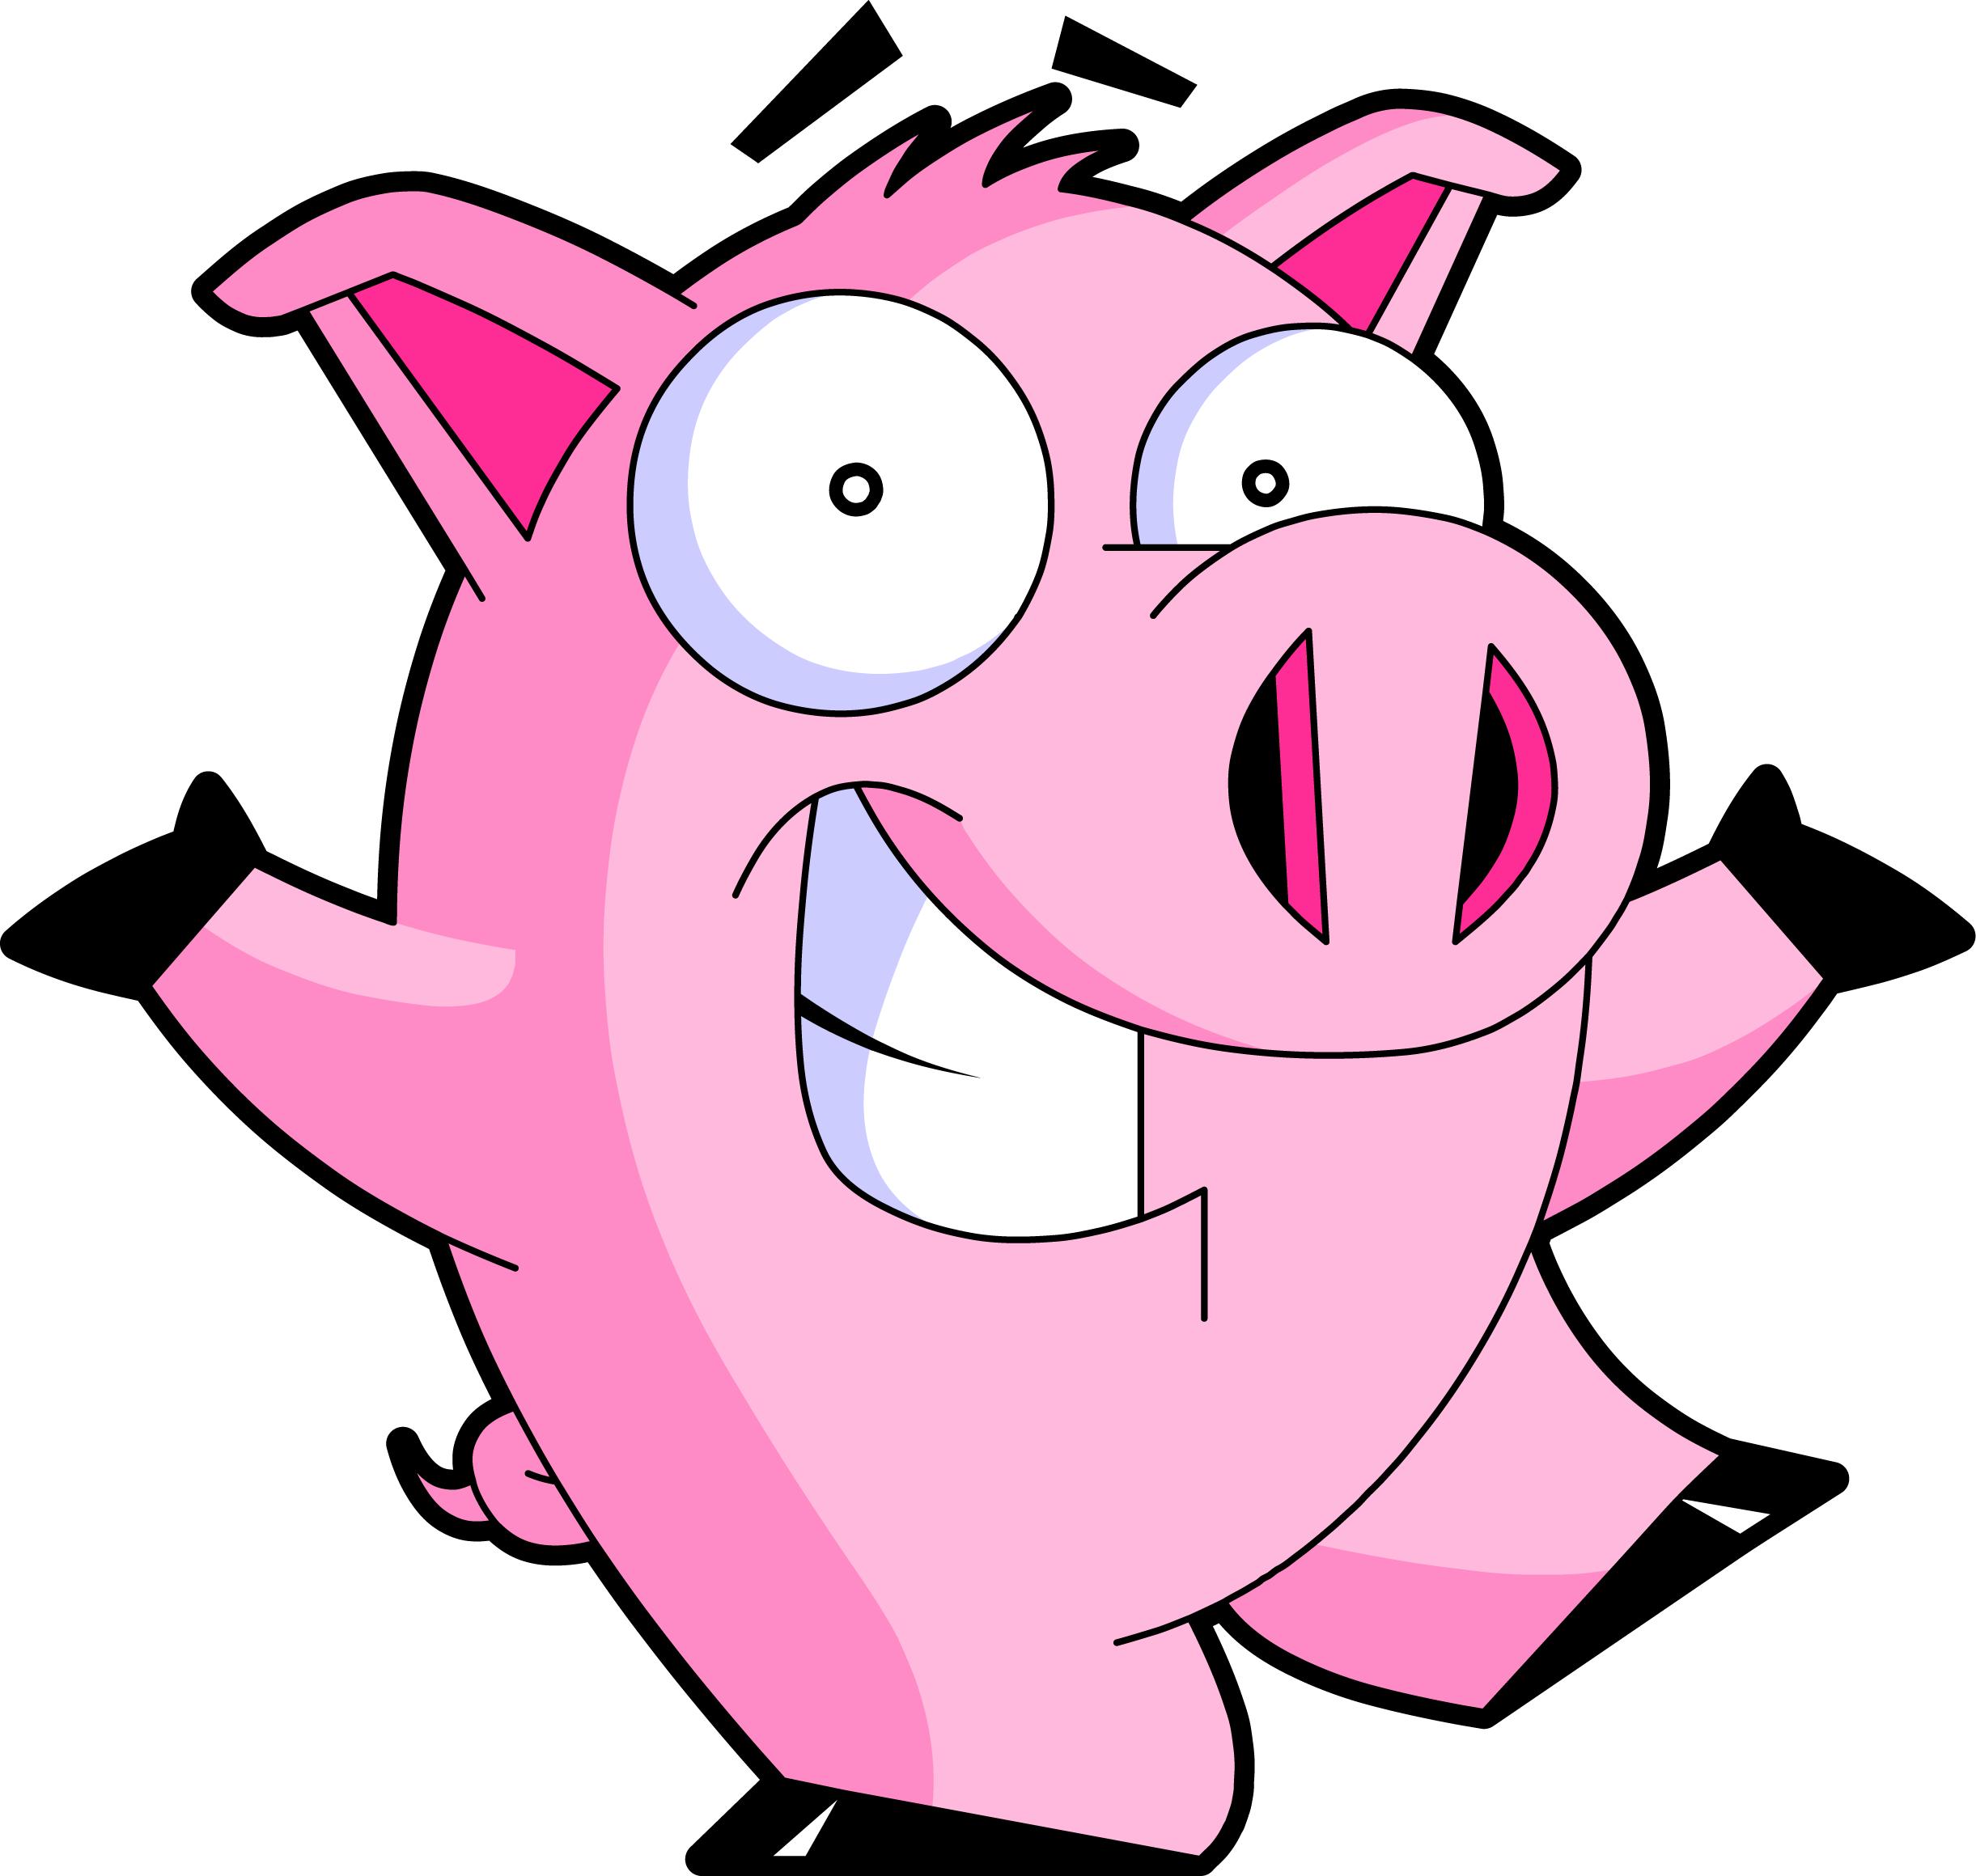 6 Best Images of BBQ Pig Logos - Animated Cartoon Pig, Cartoon BBQ ...